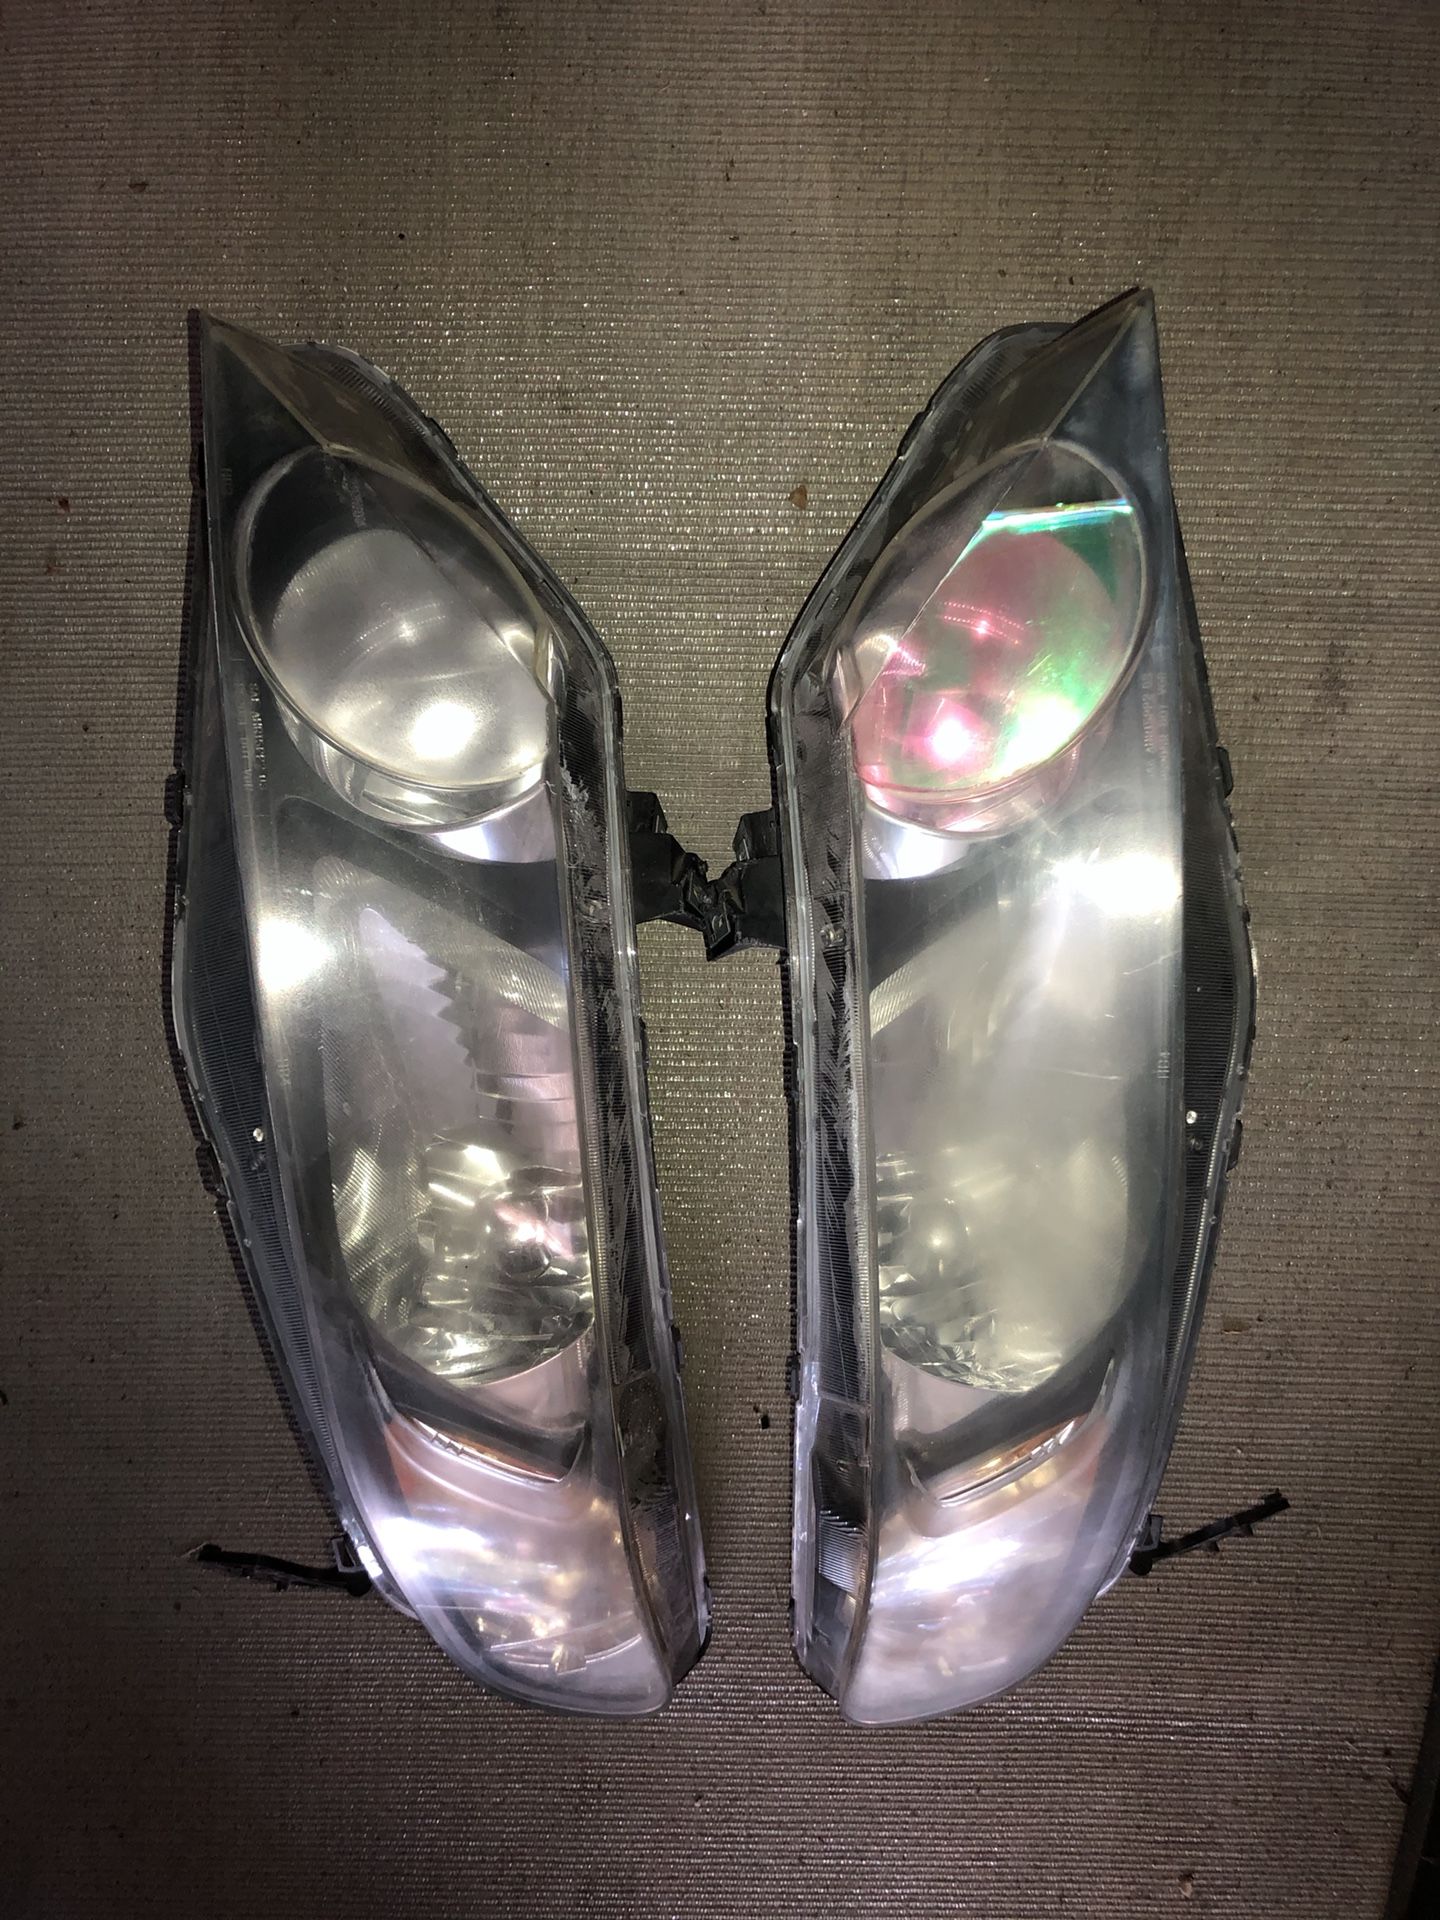 06-11 Civic headlights